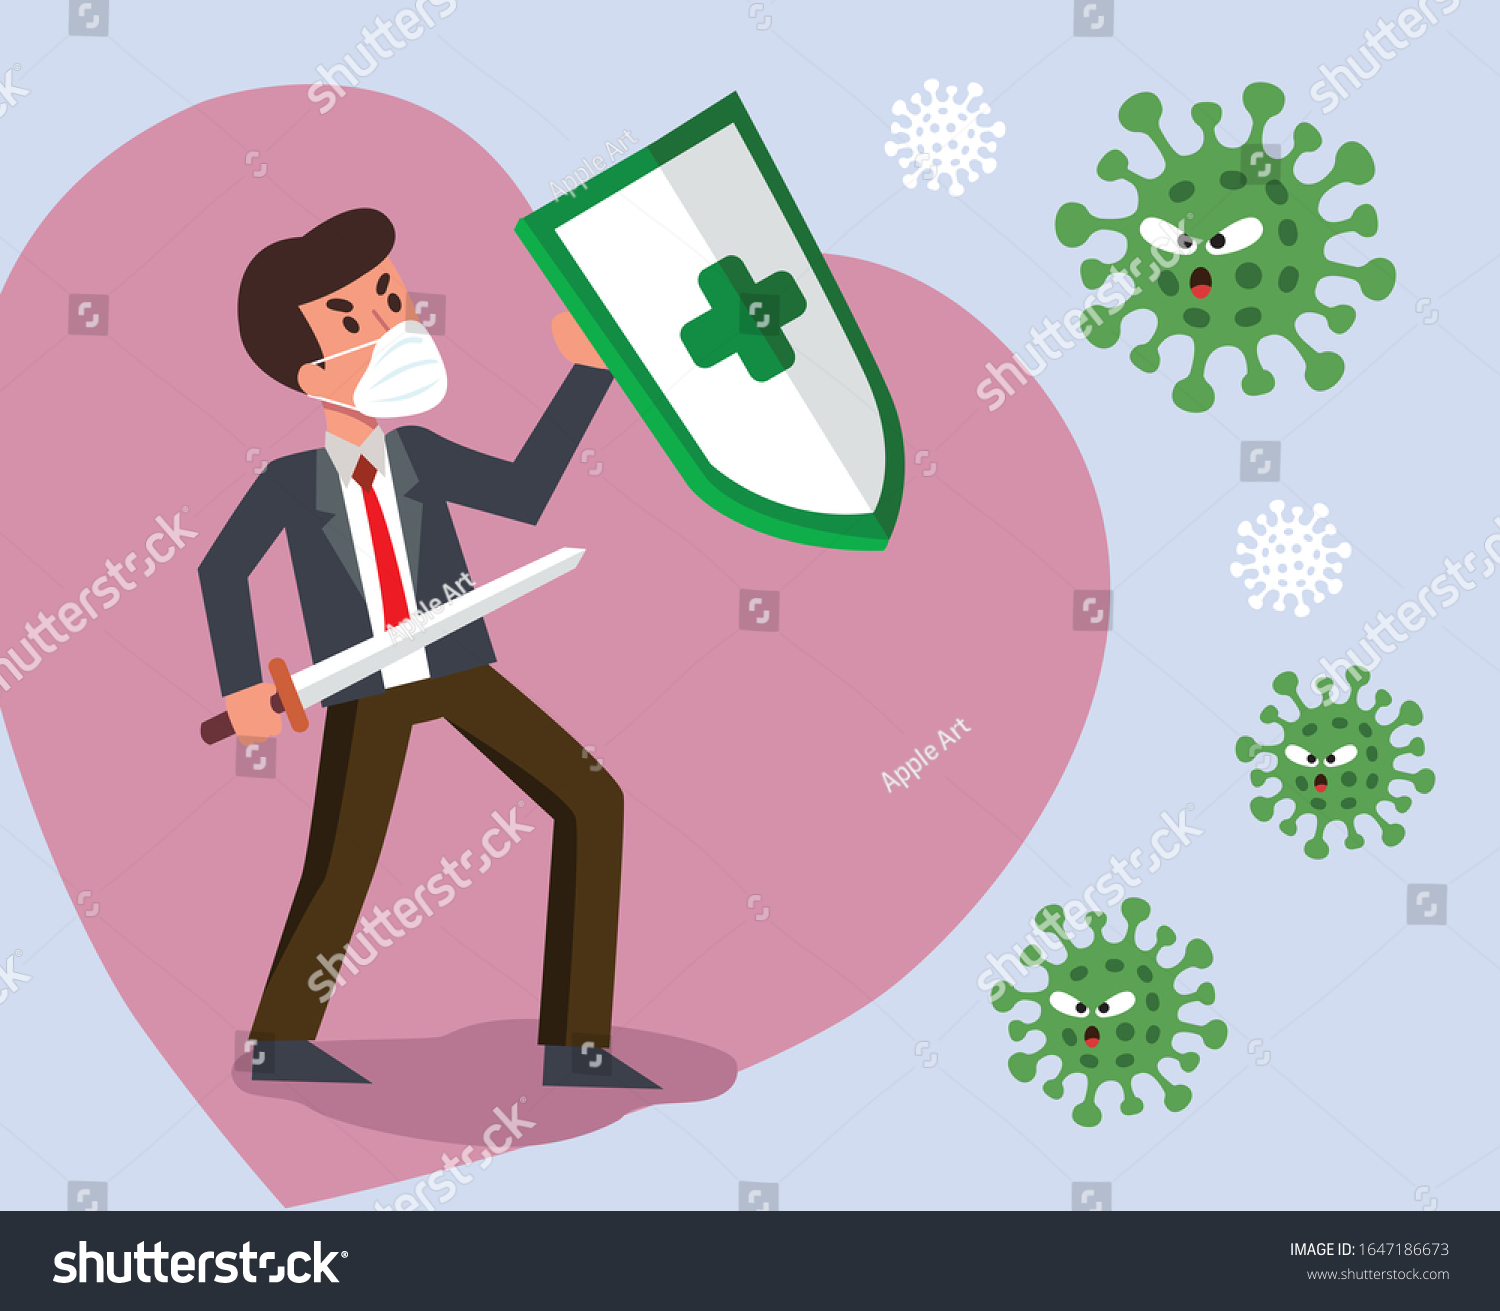 Get Coronavirus Cartoon Pictures Of Virus Images